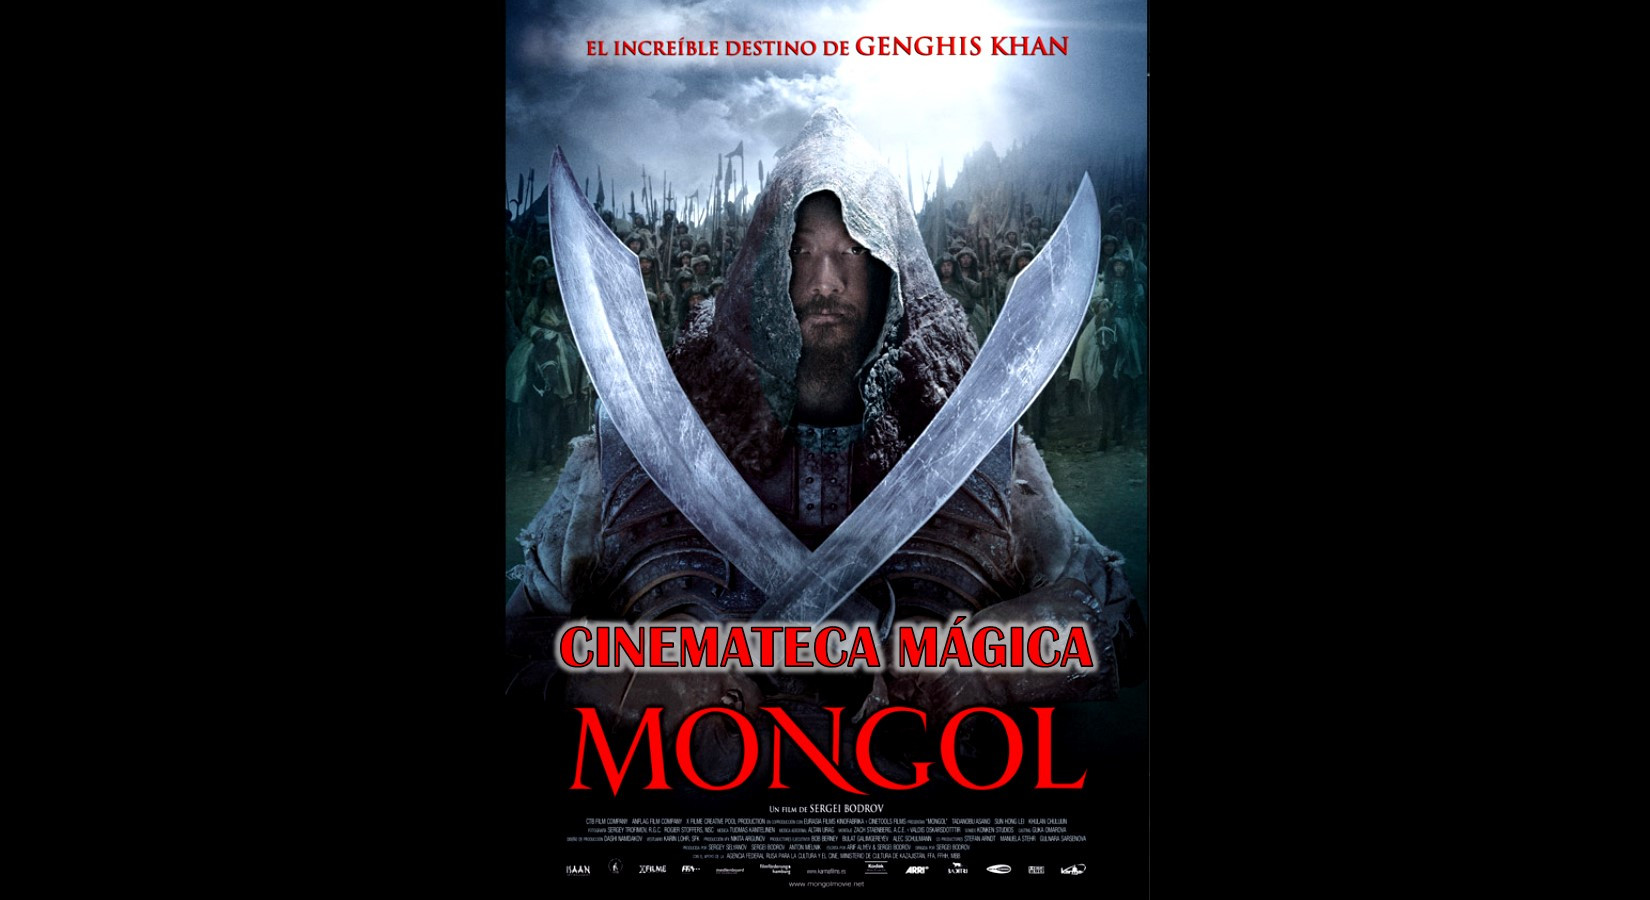 MONGOL / LA HISTORIA DE TEDMUJIN